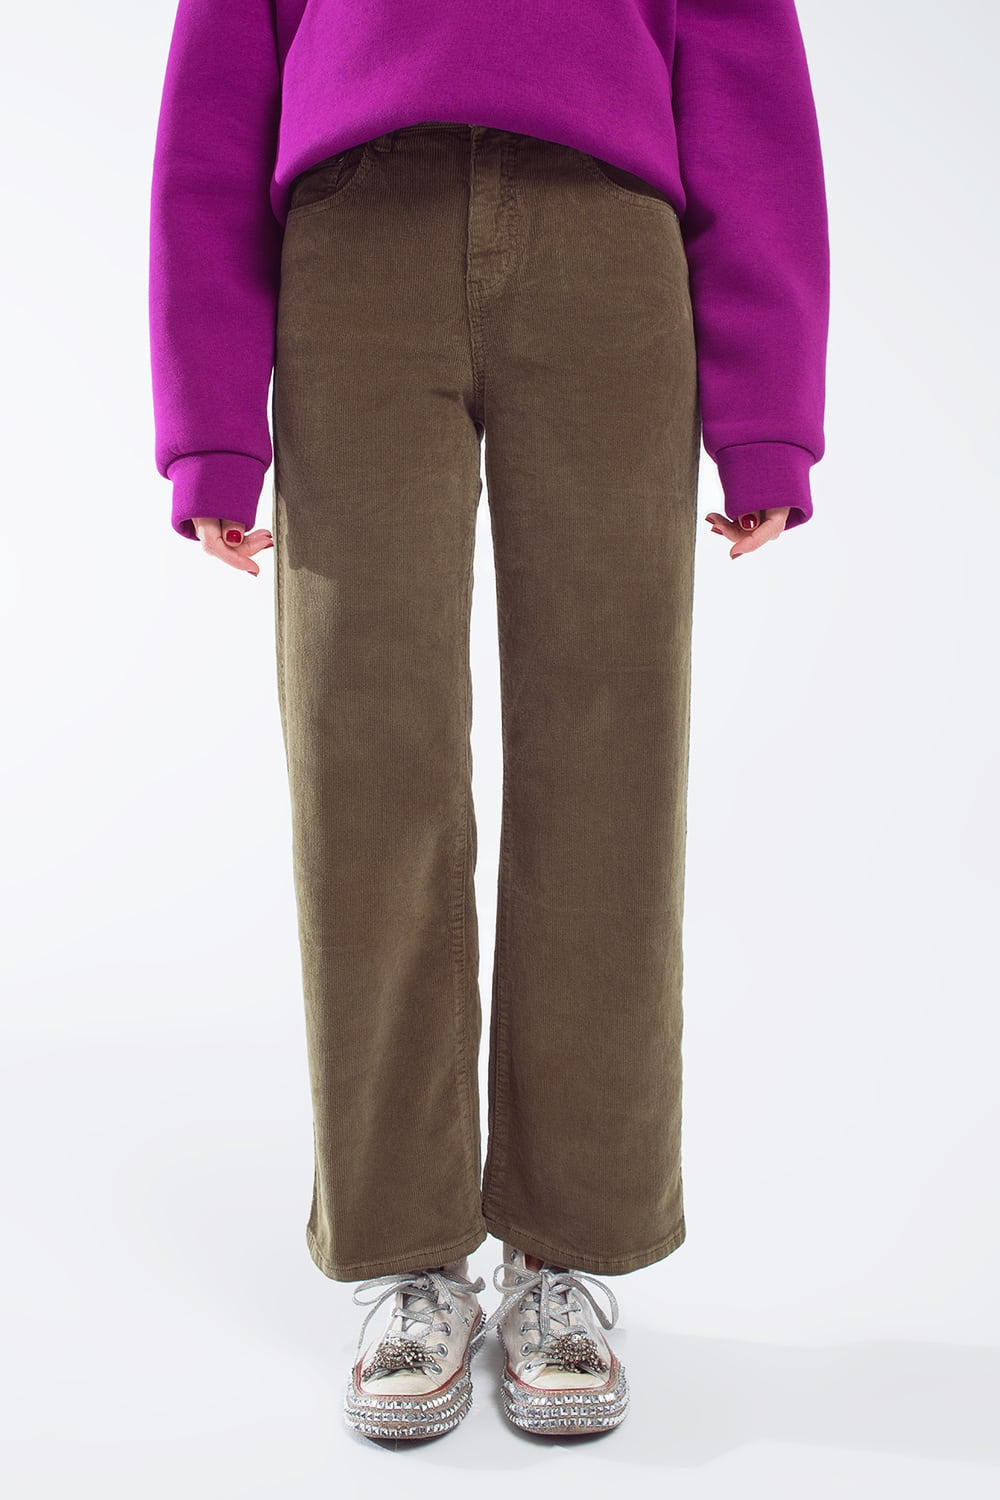 Q2 Cropped cord pants in khaki